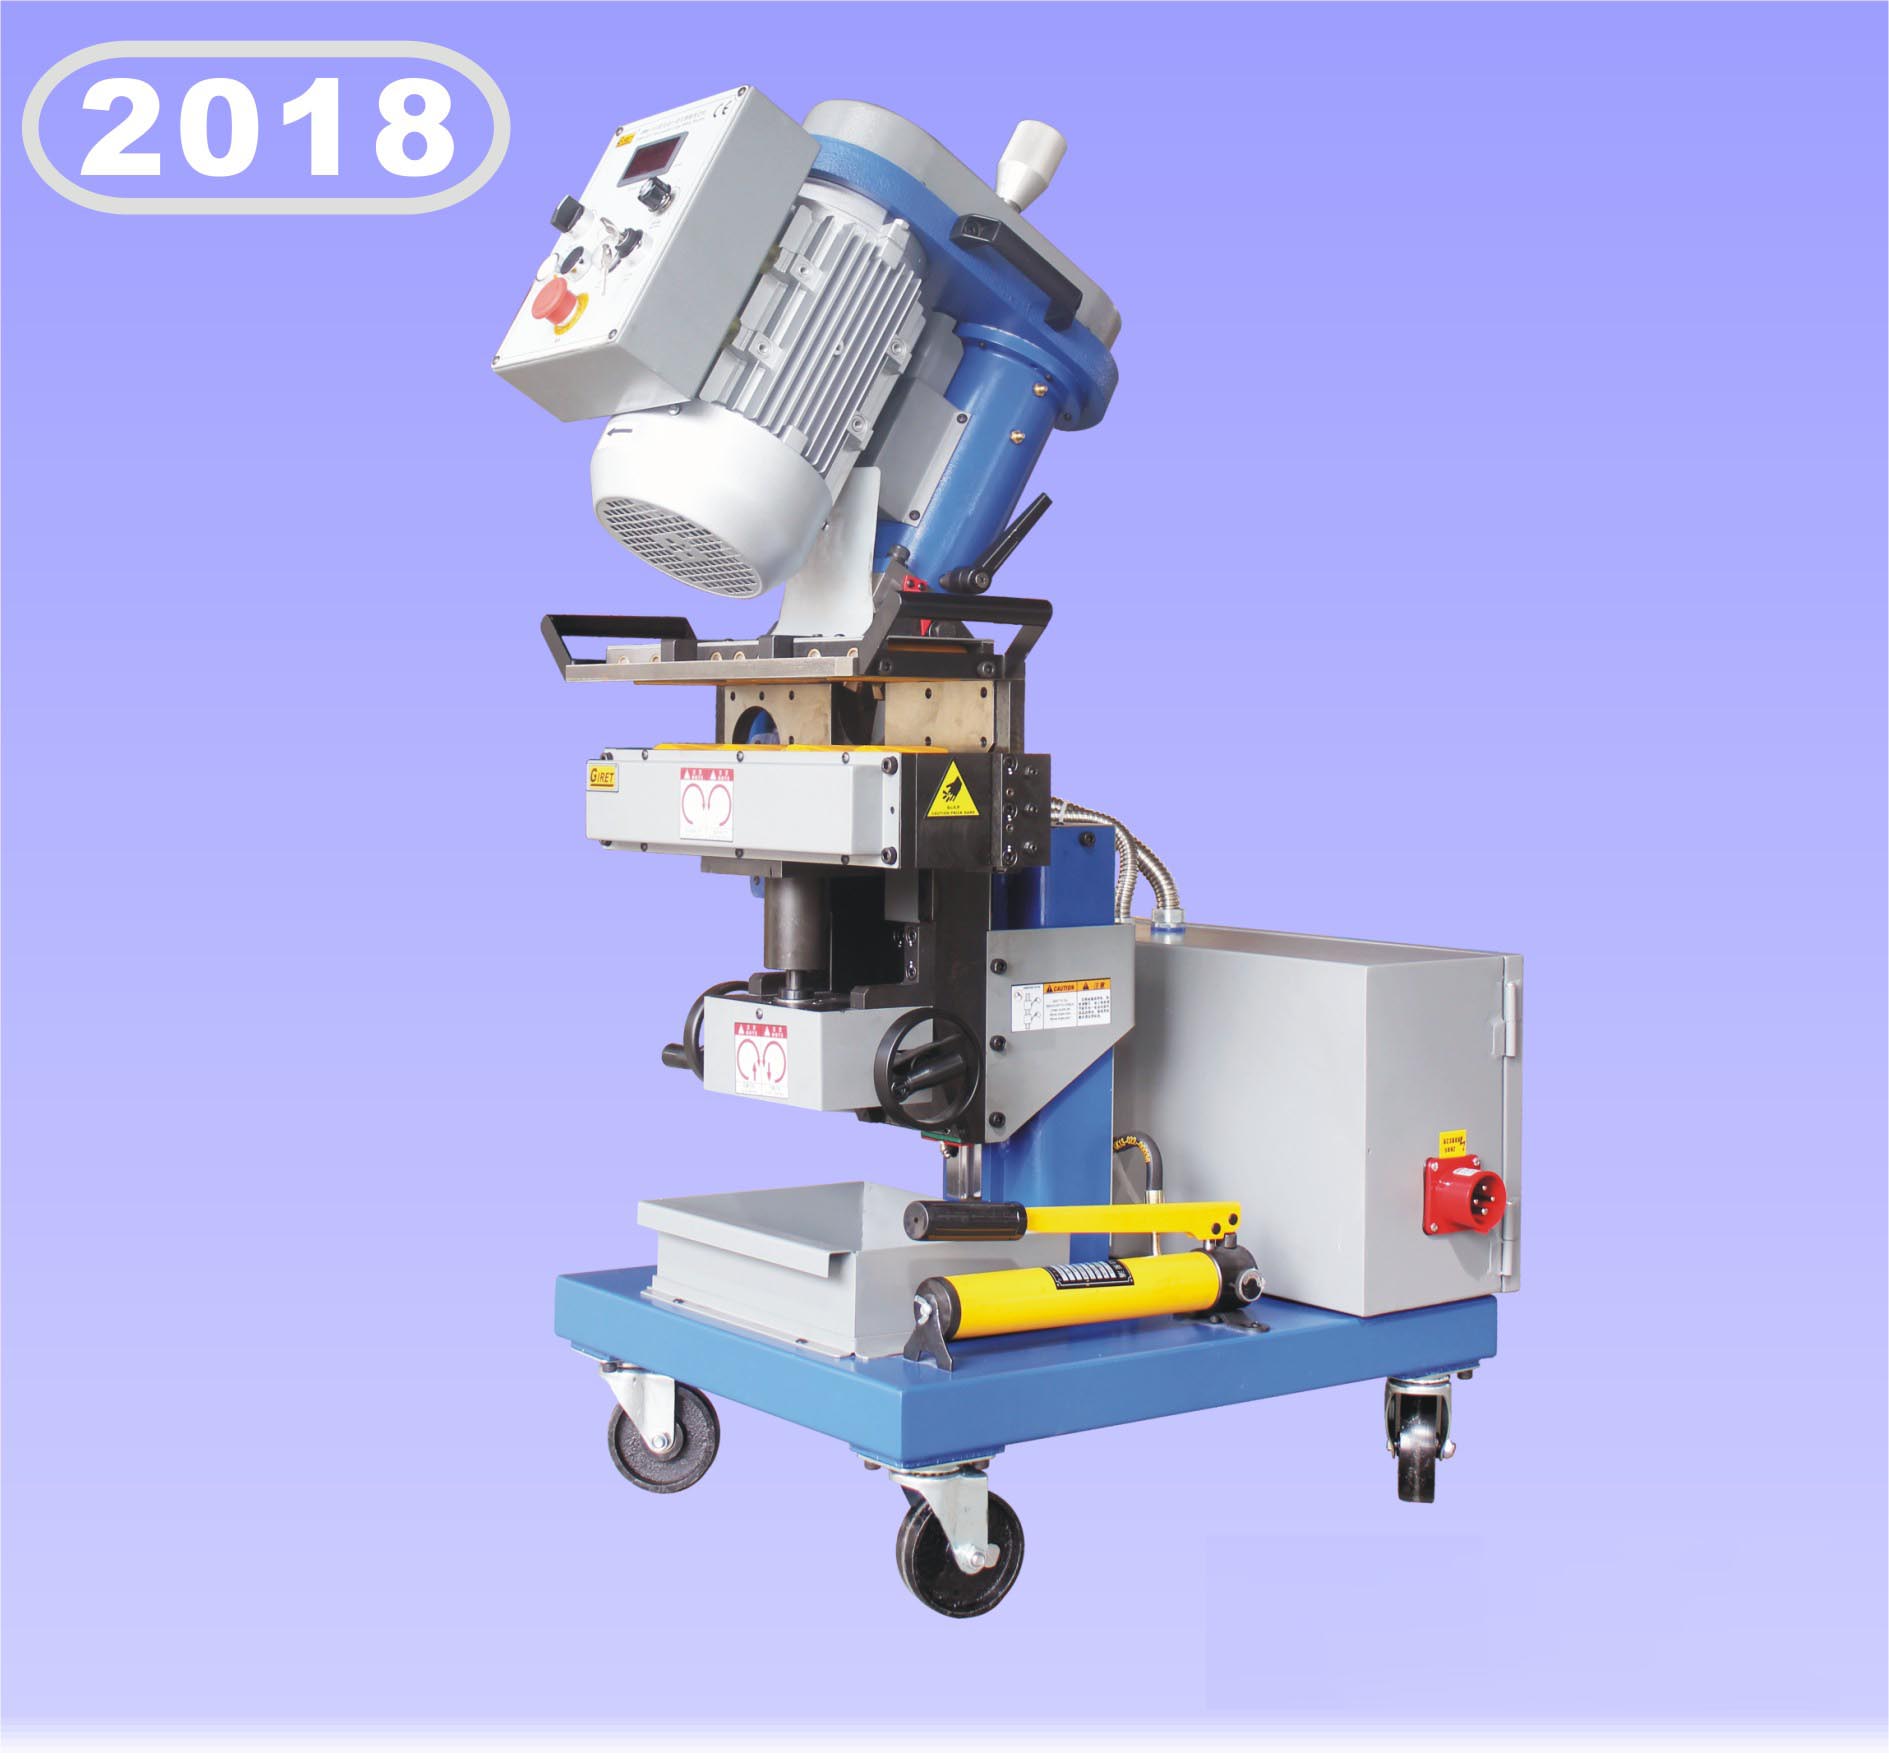 2018-GMMA-60S edge milling machine